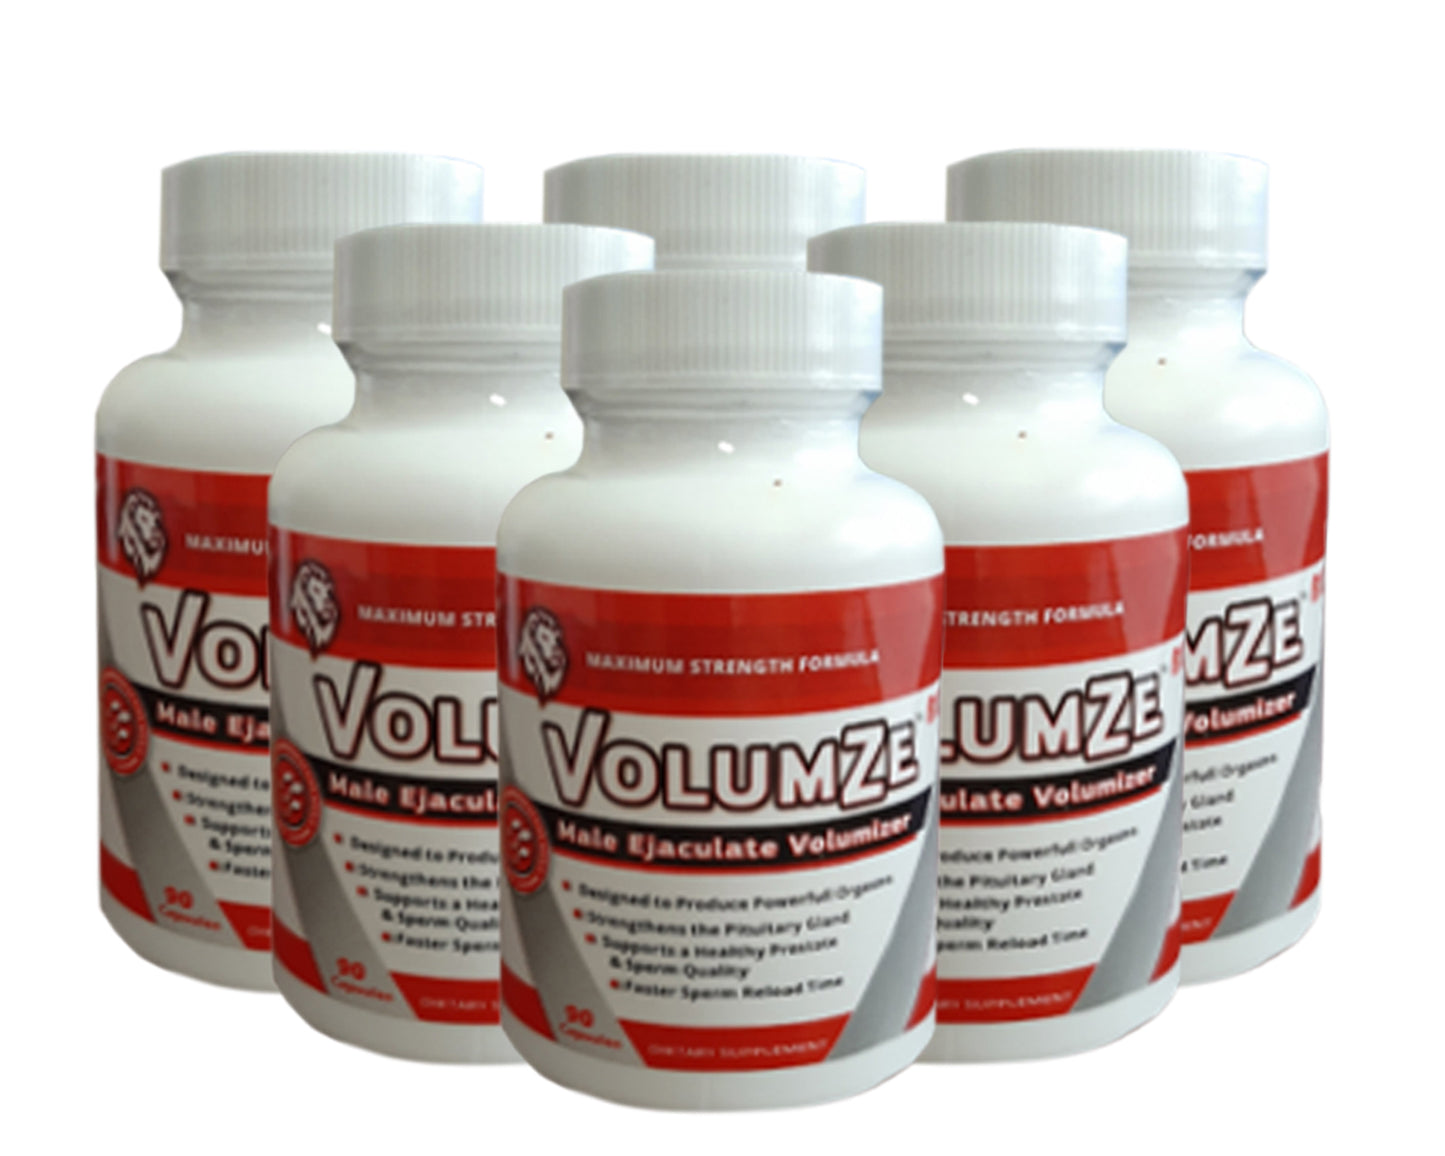 VolumZe - Male Ejaculate Volumizer